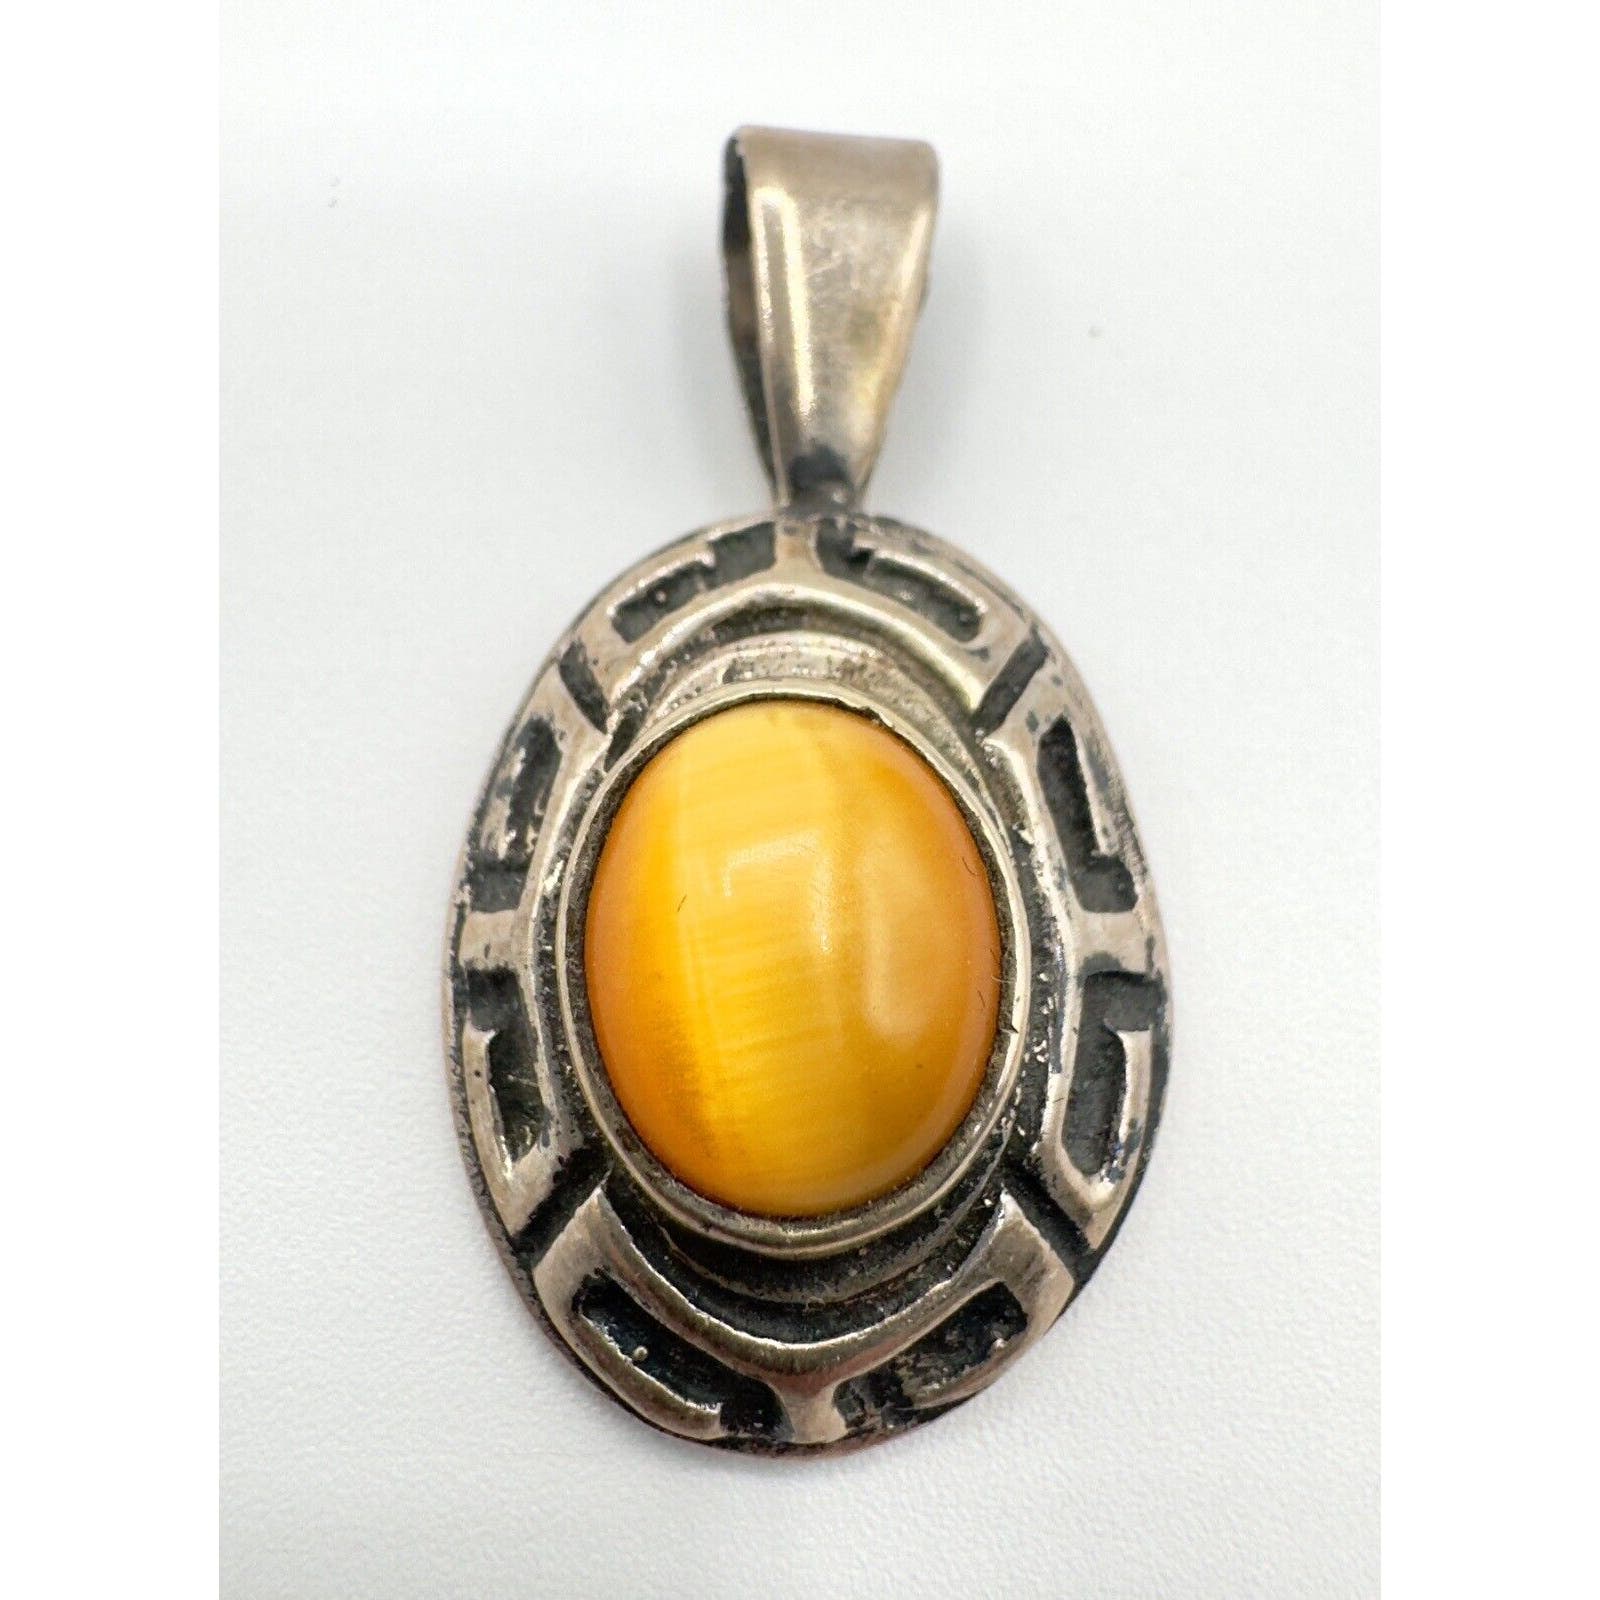 UnbrandedSterling Silver Pendant With Moonglow Glass Cabochon. Unmarked Tested 1.5”x.75” - Black Dog Vintage